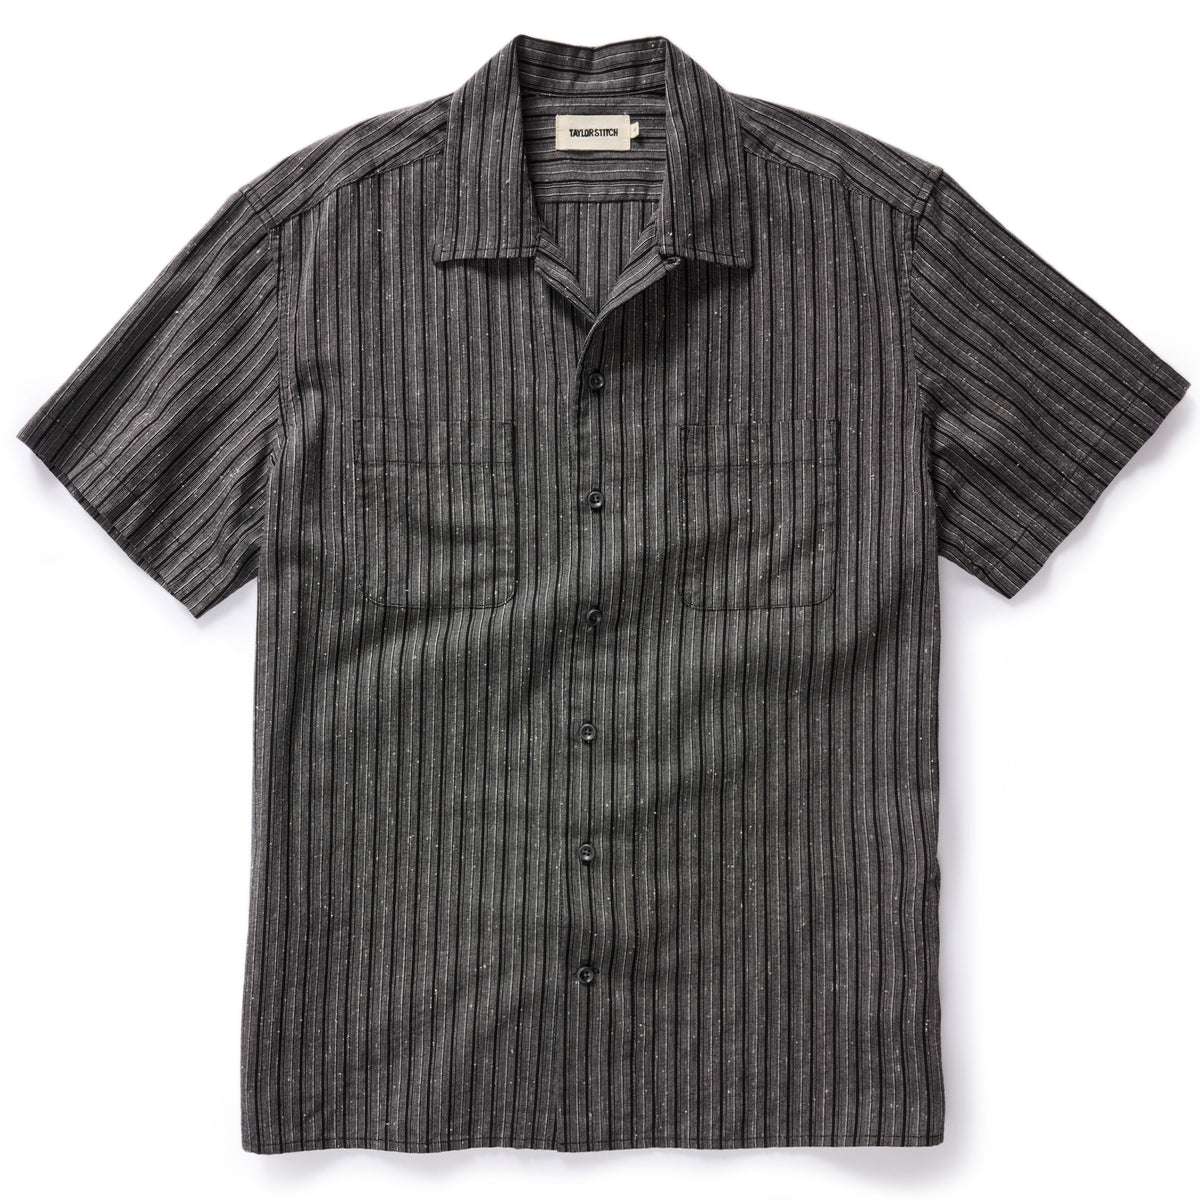 The Conrad Shirt in Black Indigo Slub Stripe